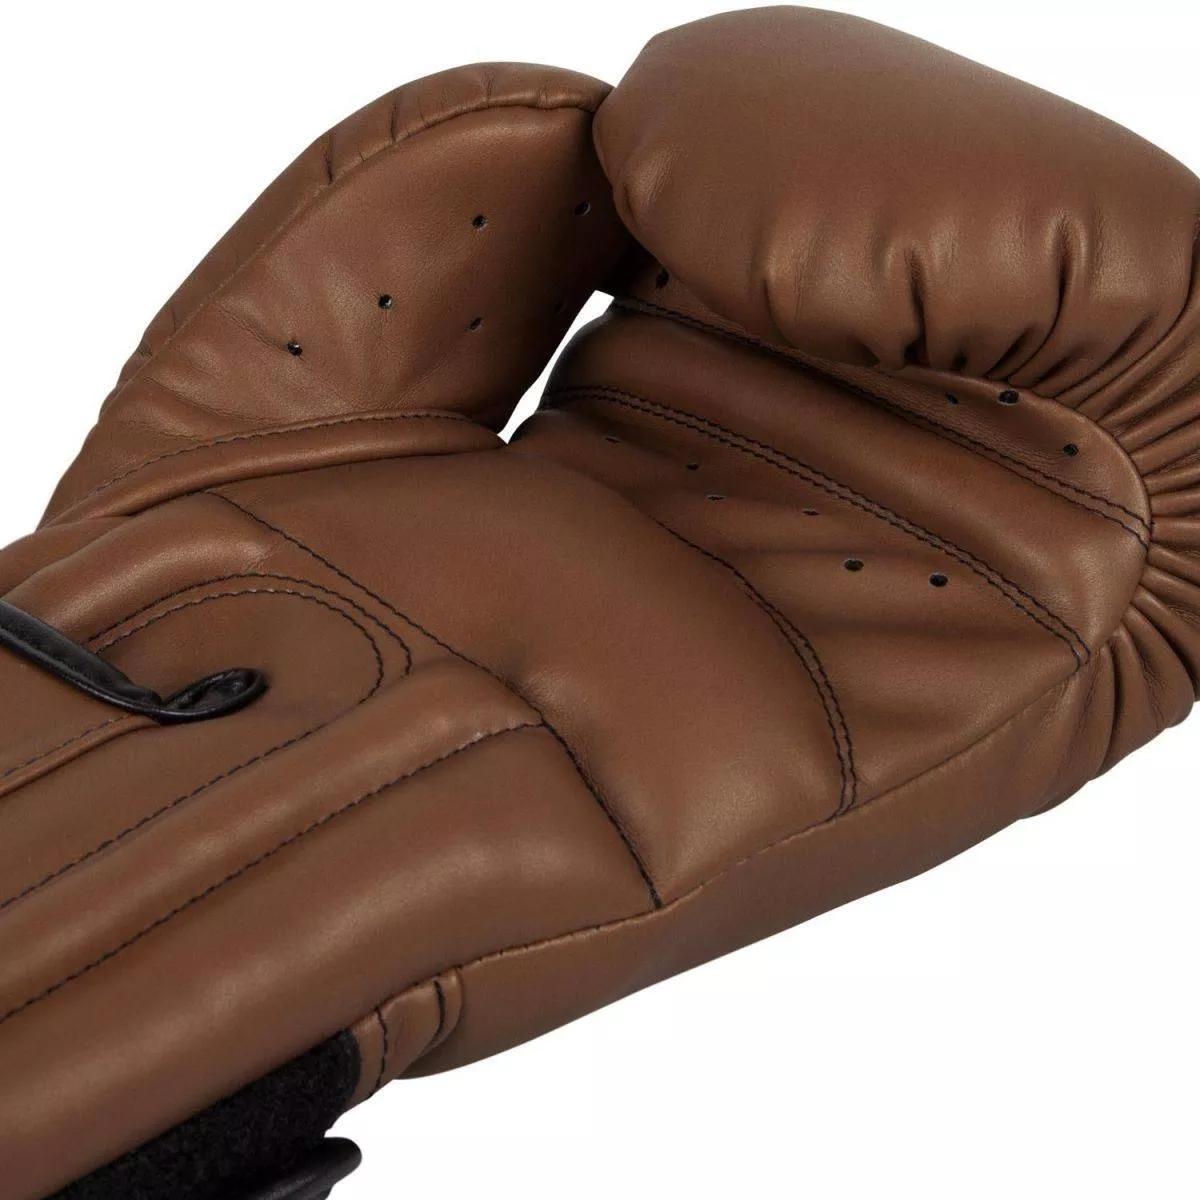 Боксерские перчатки Venum Giant Sparring Boxing Gloves